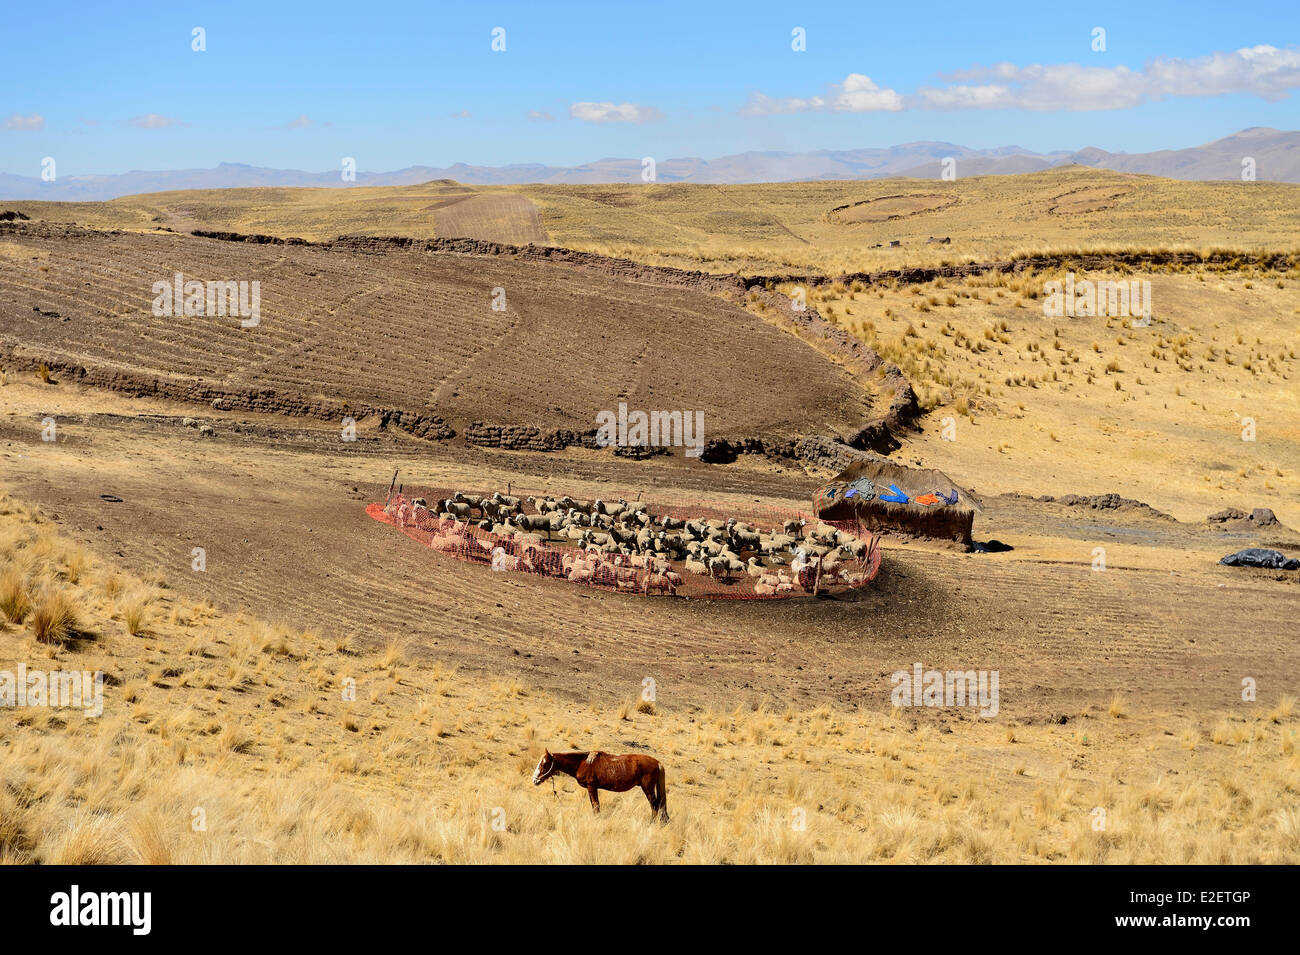 Peru, Espinar province, circular enclosure for sheep and llamas in the valley of El Descanso Stock Photo